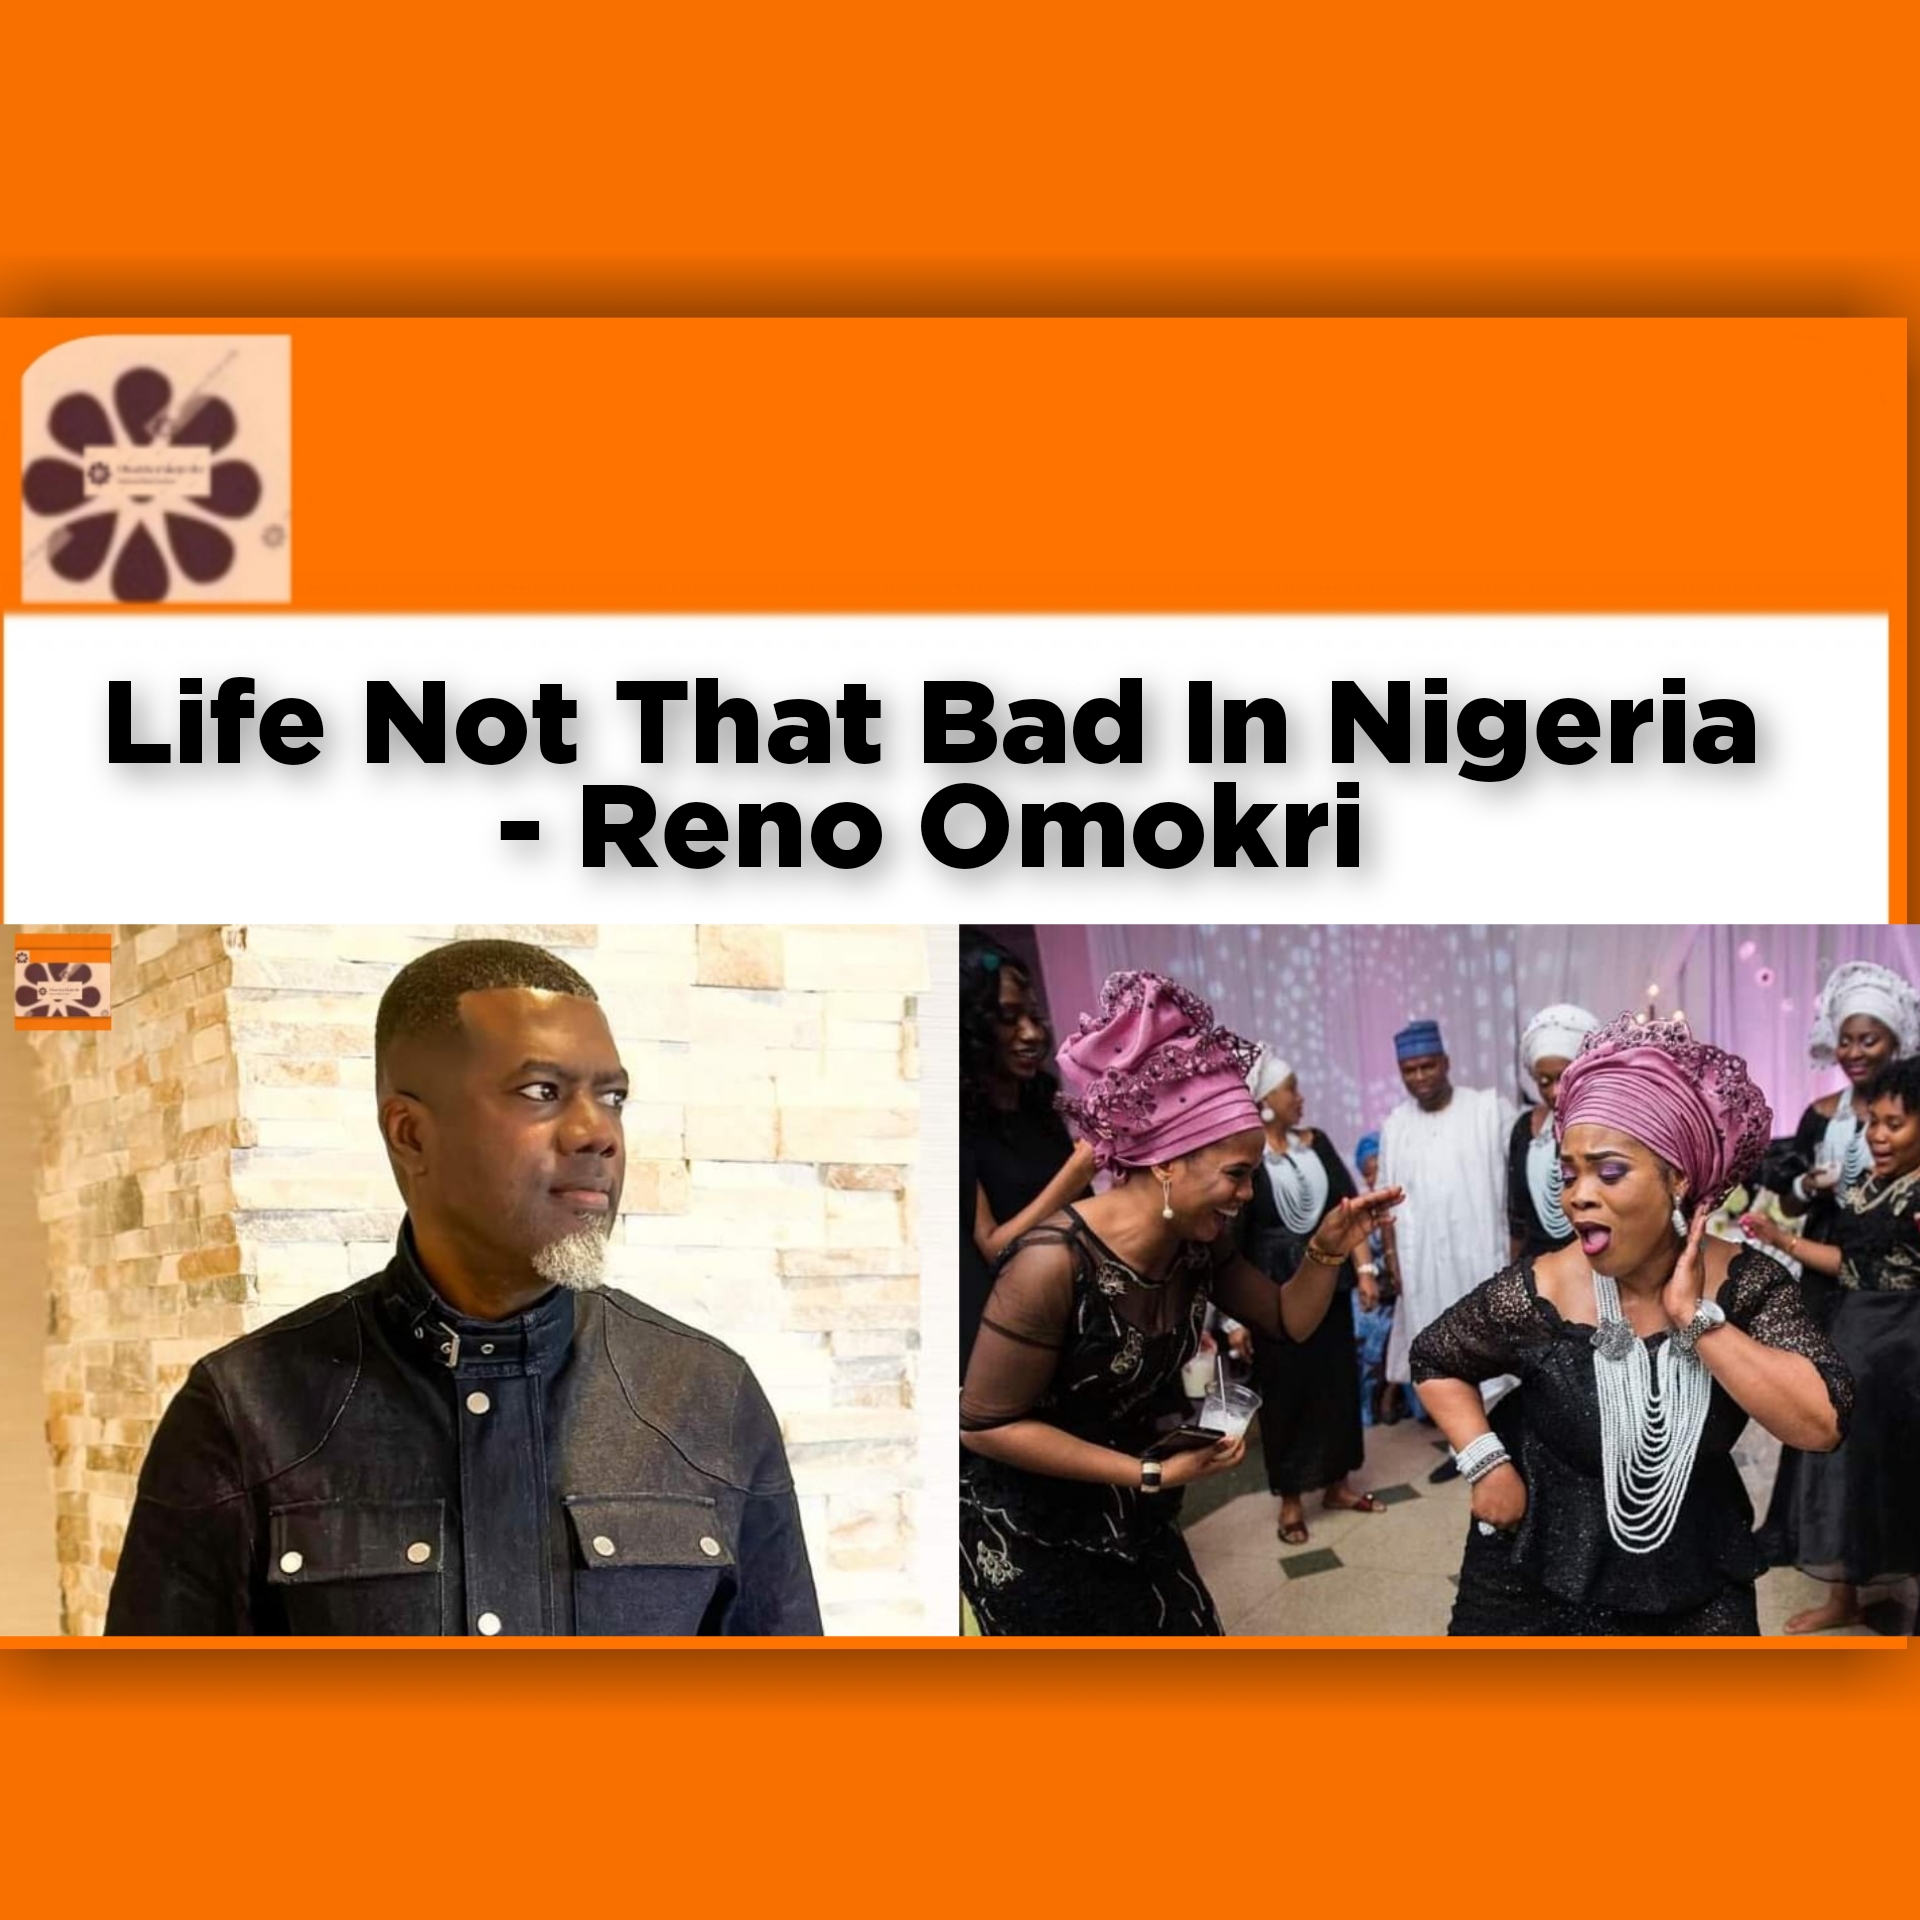 Life Not That Bad In Nigeria - Reno Omokri ~ OsazuwaAkonedo #Emefiele